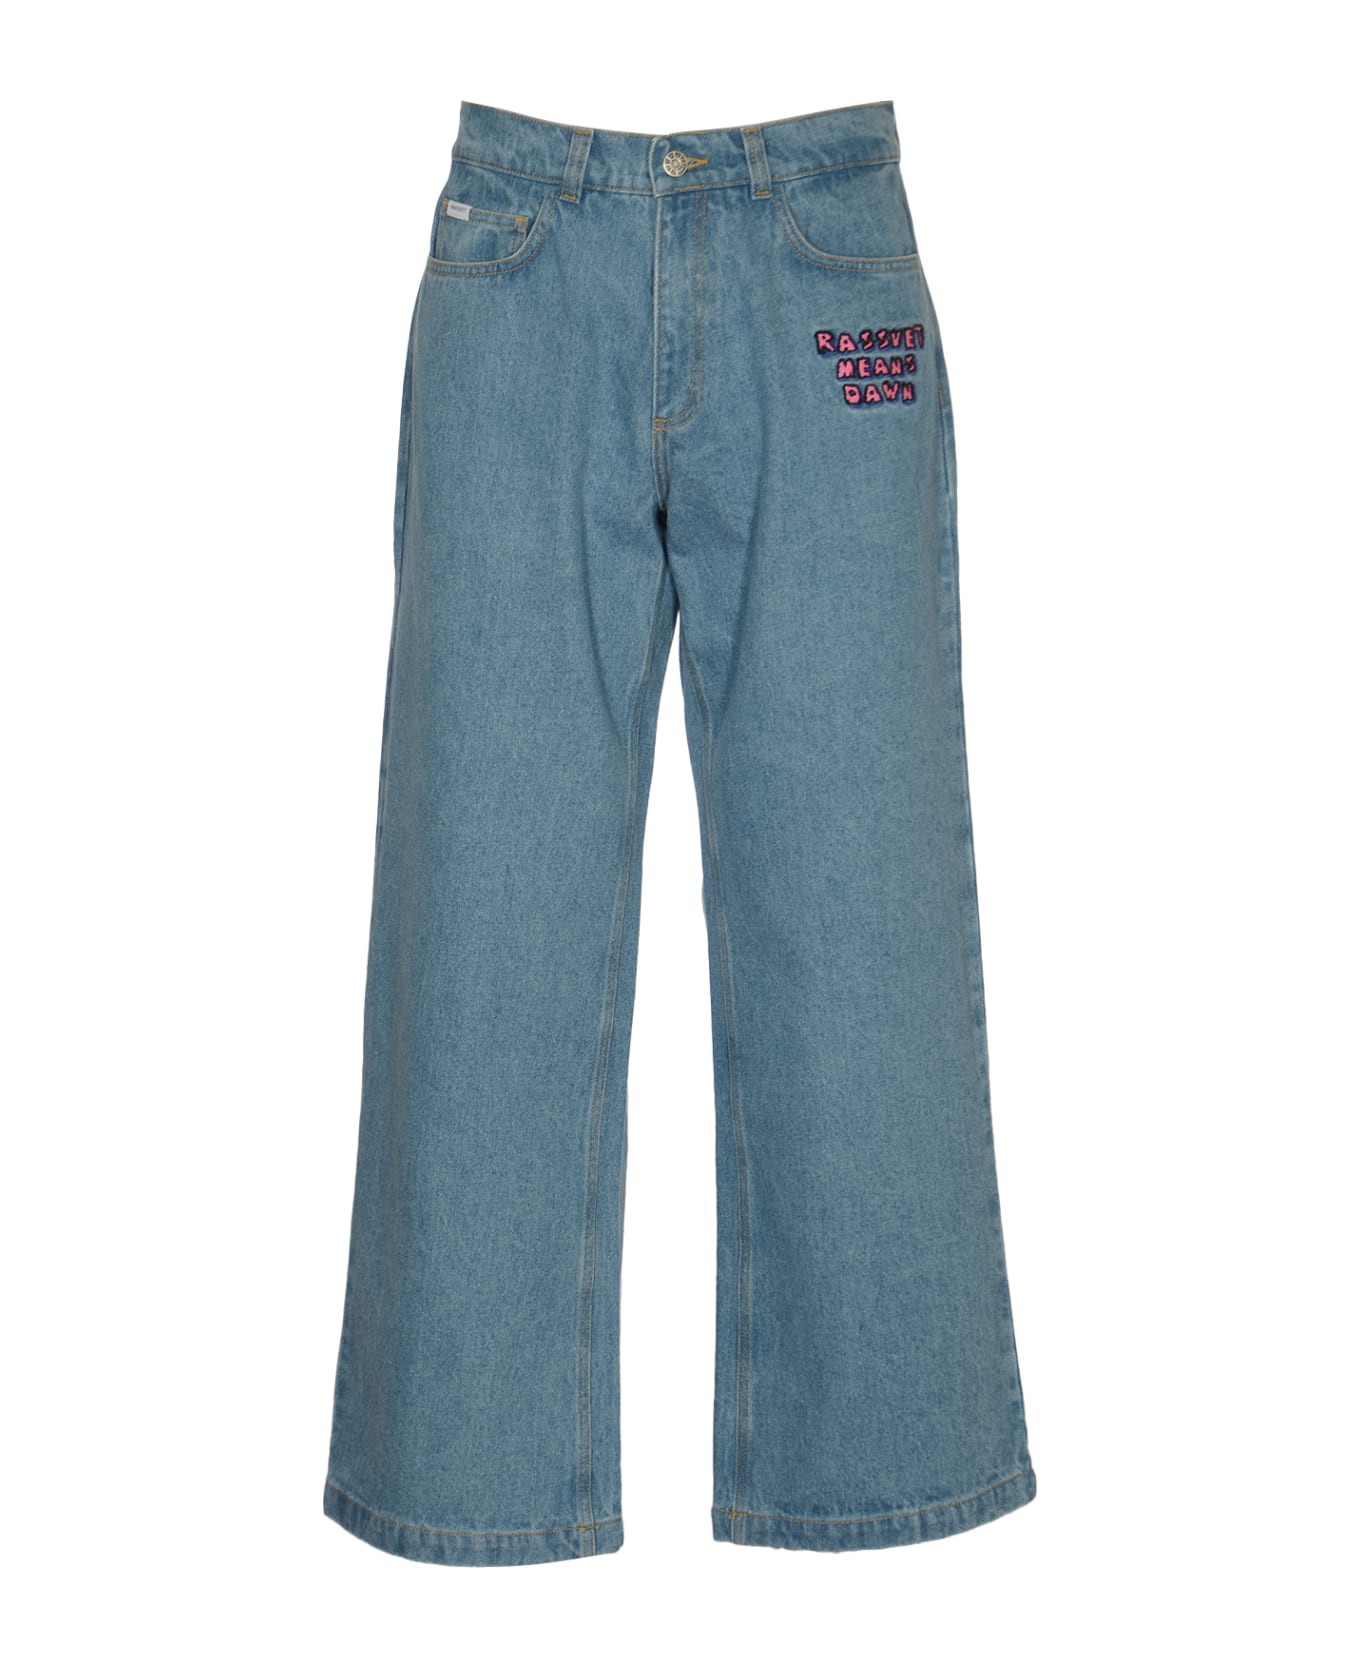 Rassvet Embroidered 5 Pockets Jeans - Light Blue